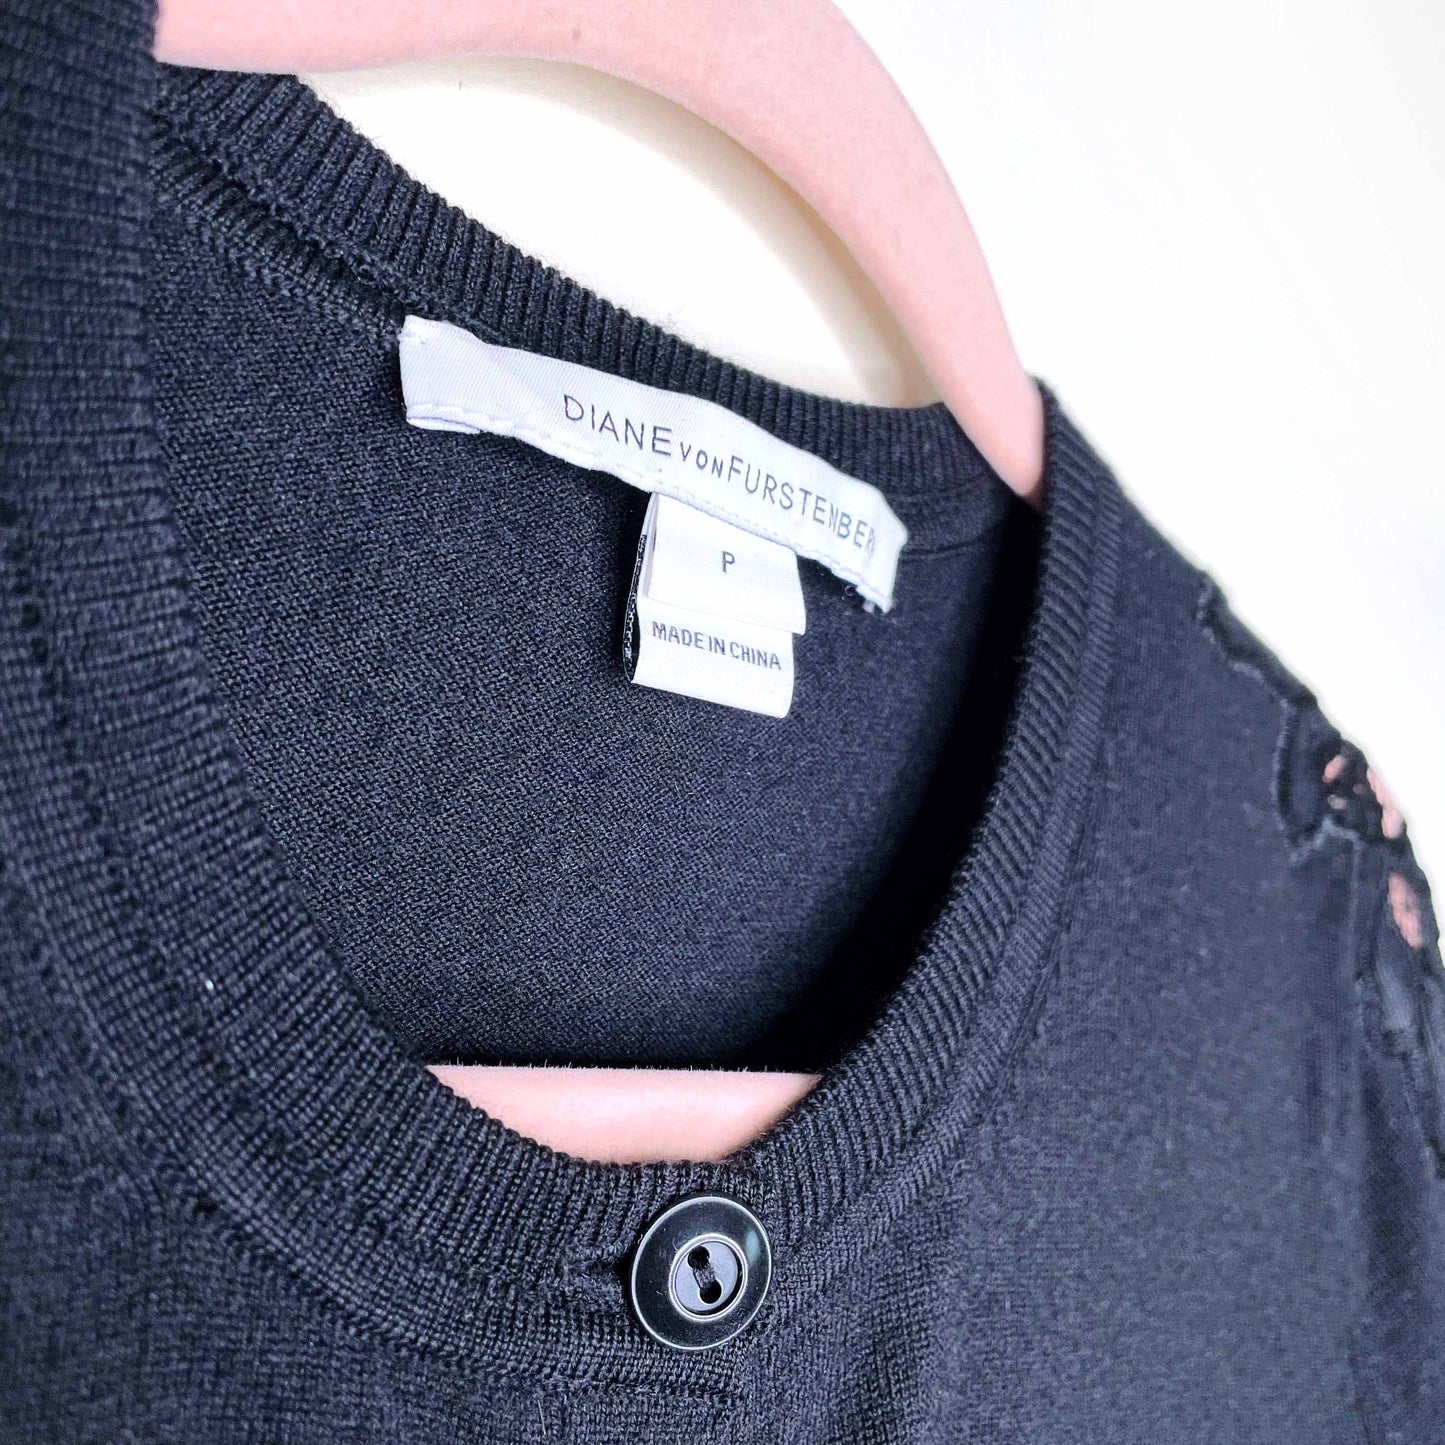 diane von furstenberg lace trim black wool cardigan - size xs